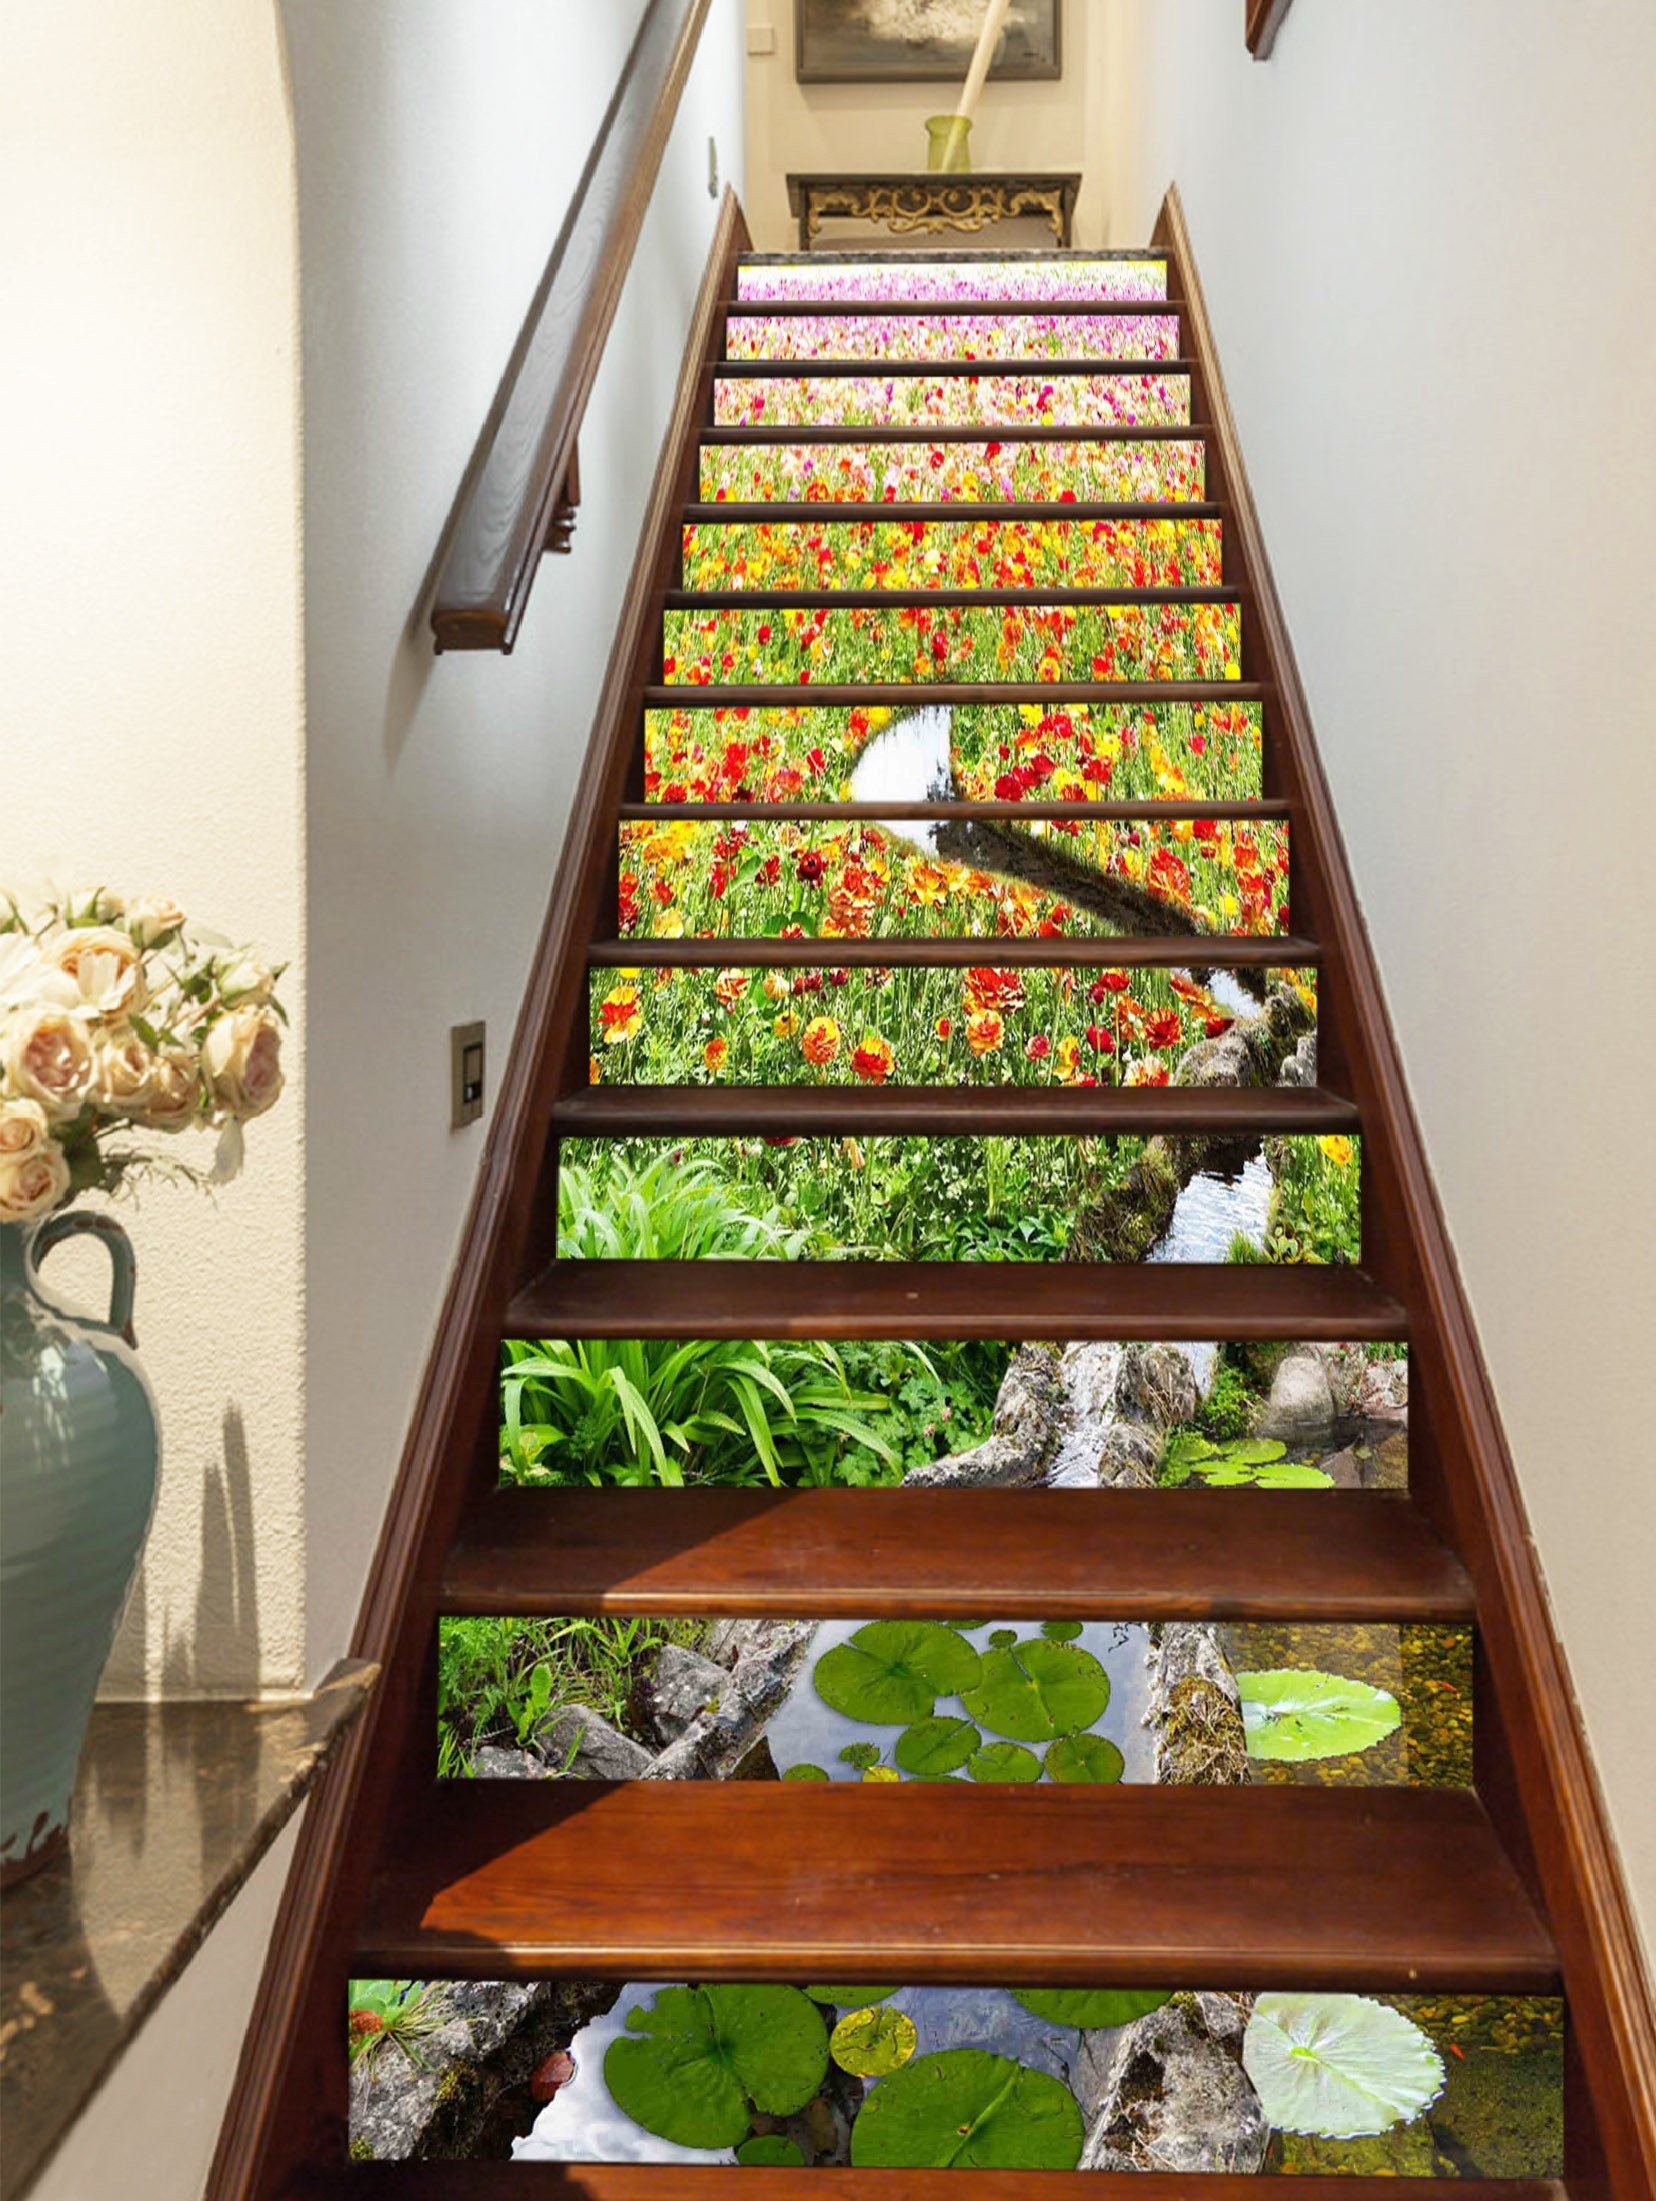 3D Flowers Field Creek 1343 Stair Risers Wallpaper AJ Wallpaper 